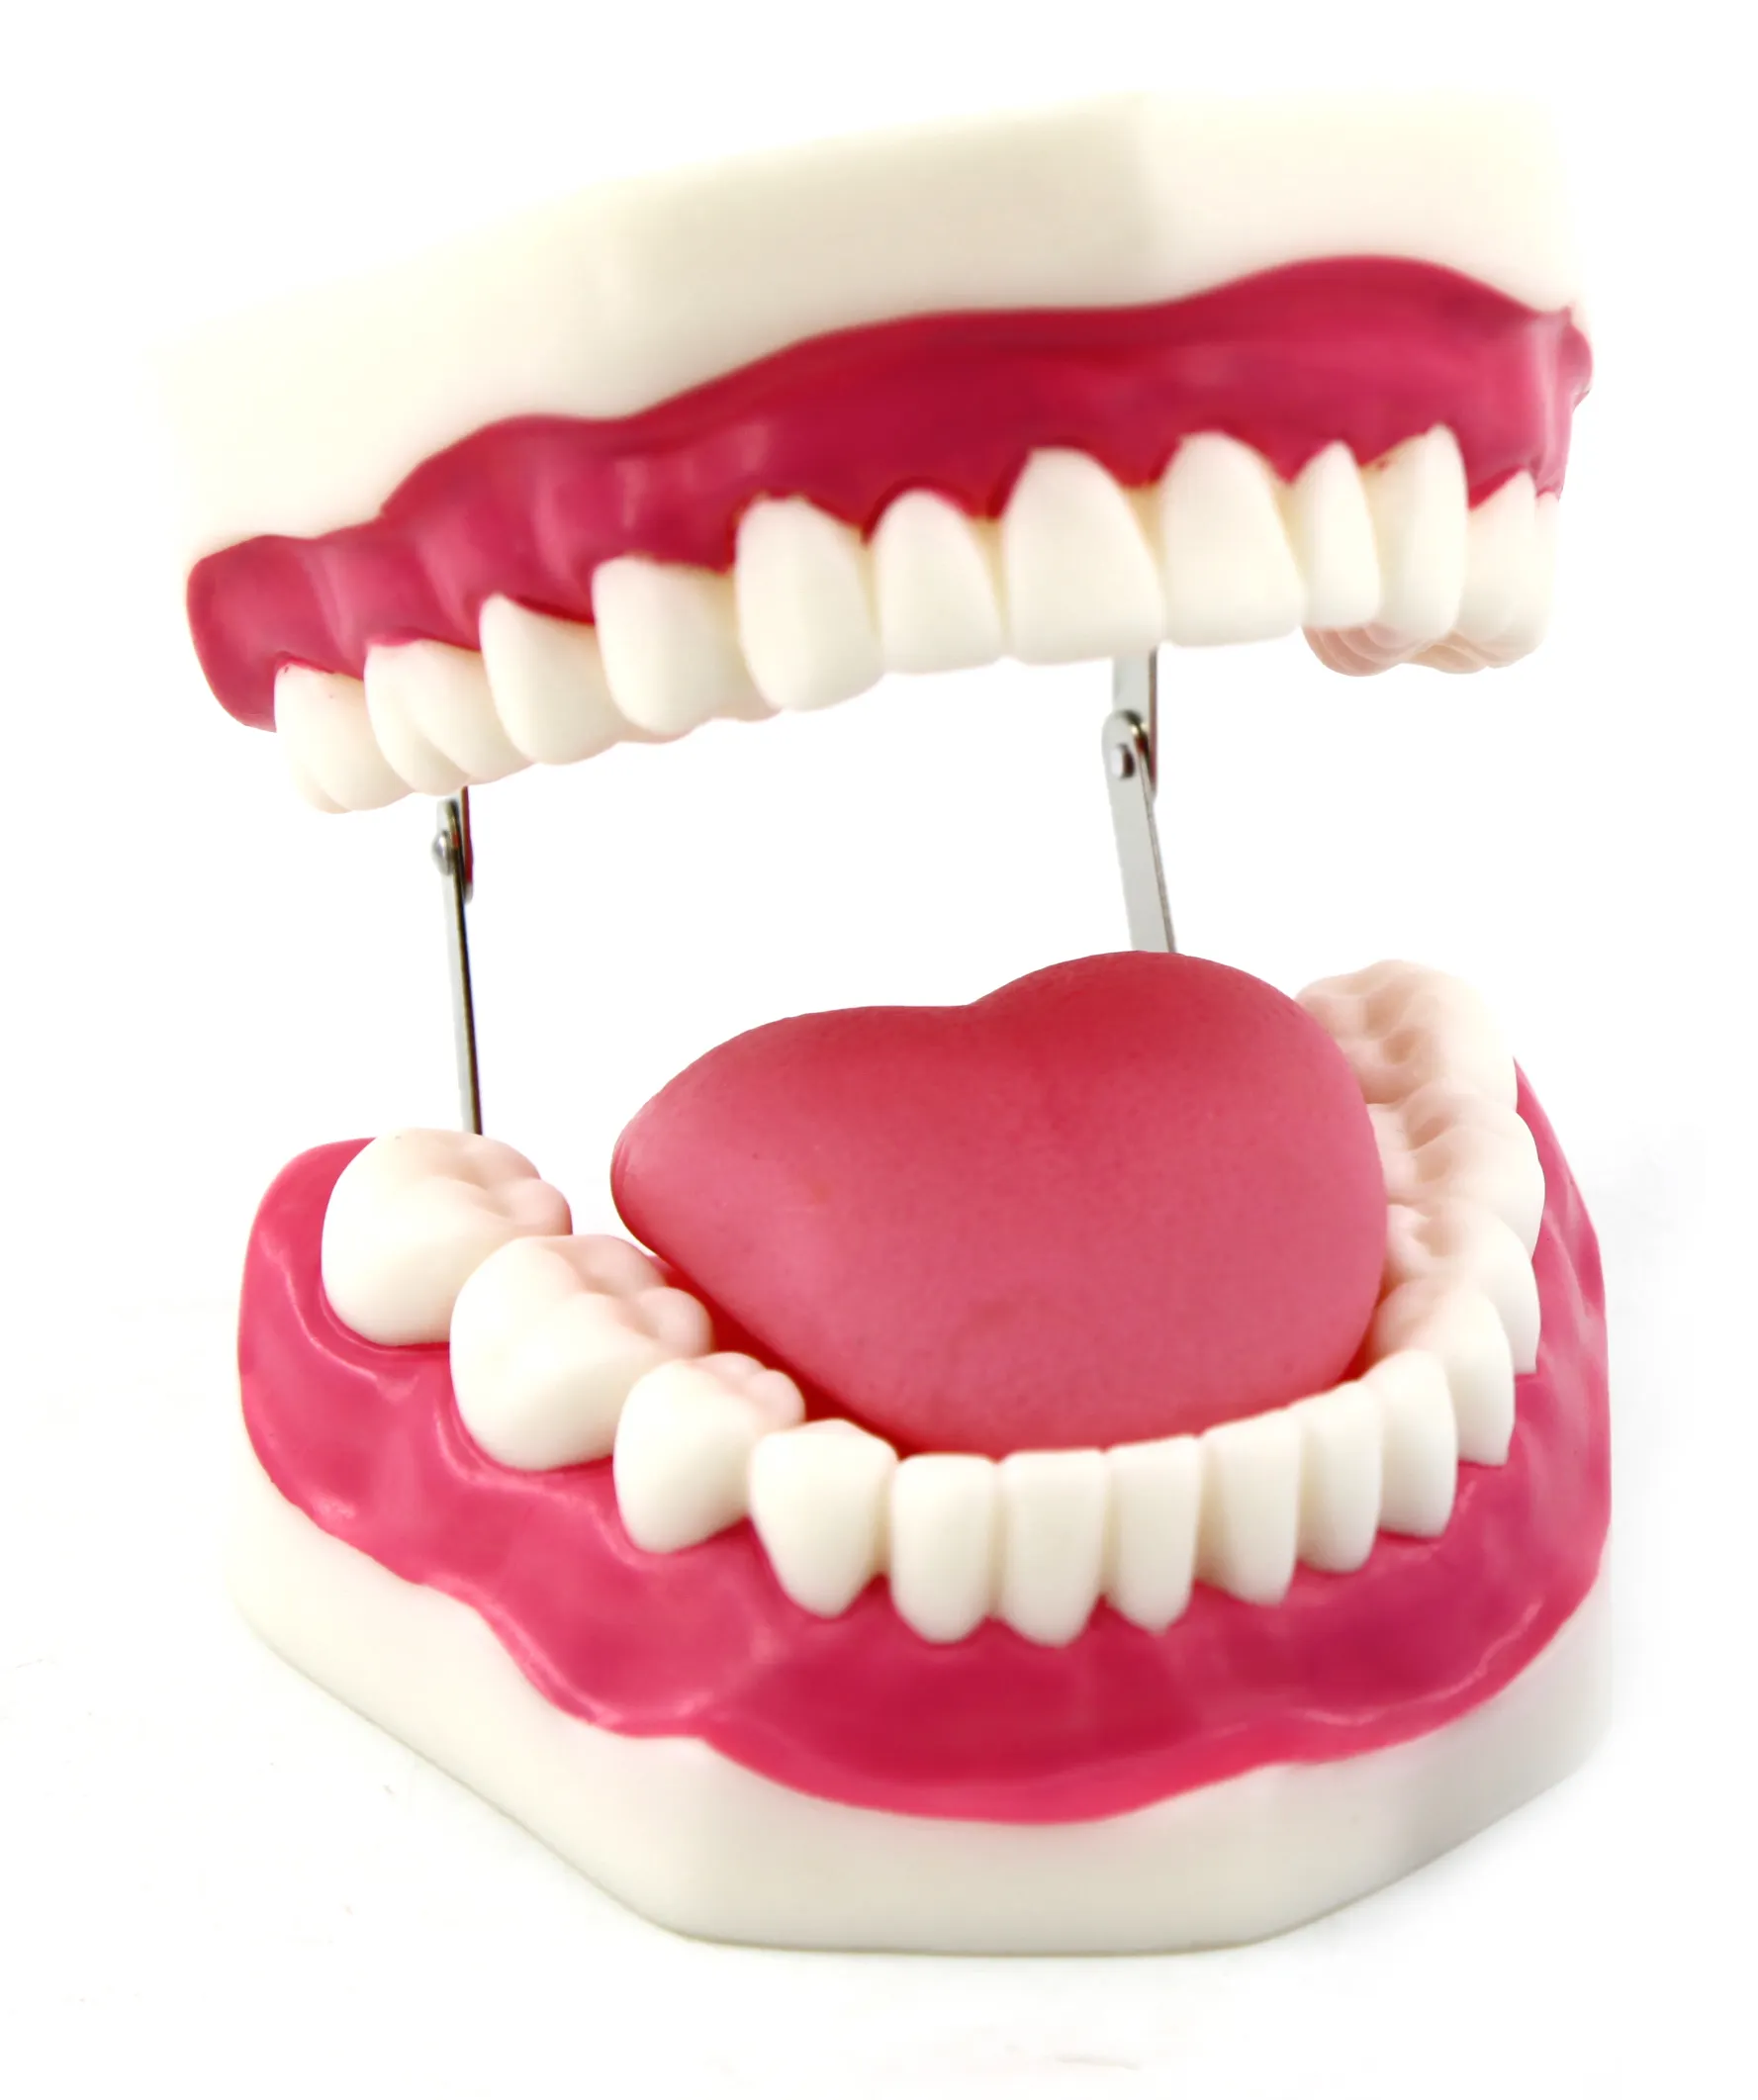 Best selling human dental teeth model for studying human teeth hygiene set with tongue molar teeth model